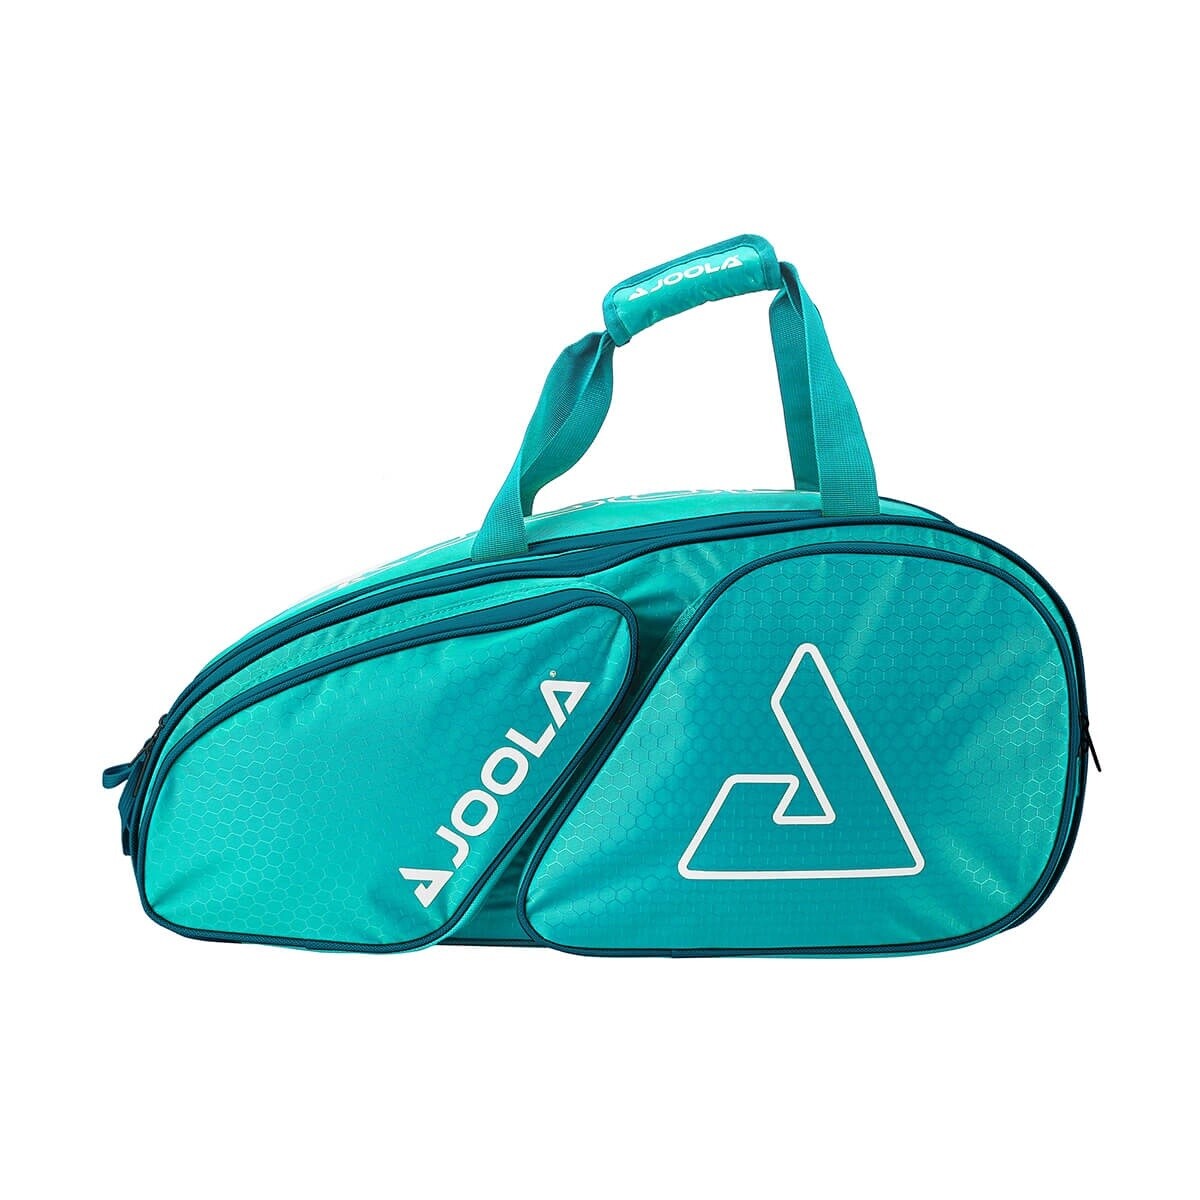 JOOLA Tour Elite Pro Pickleball Bag, Color: Turquoise/Teal